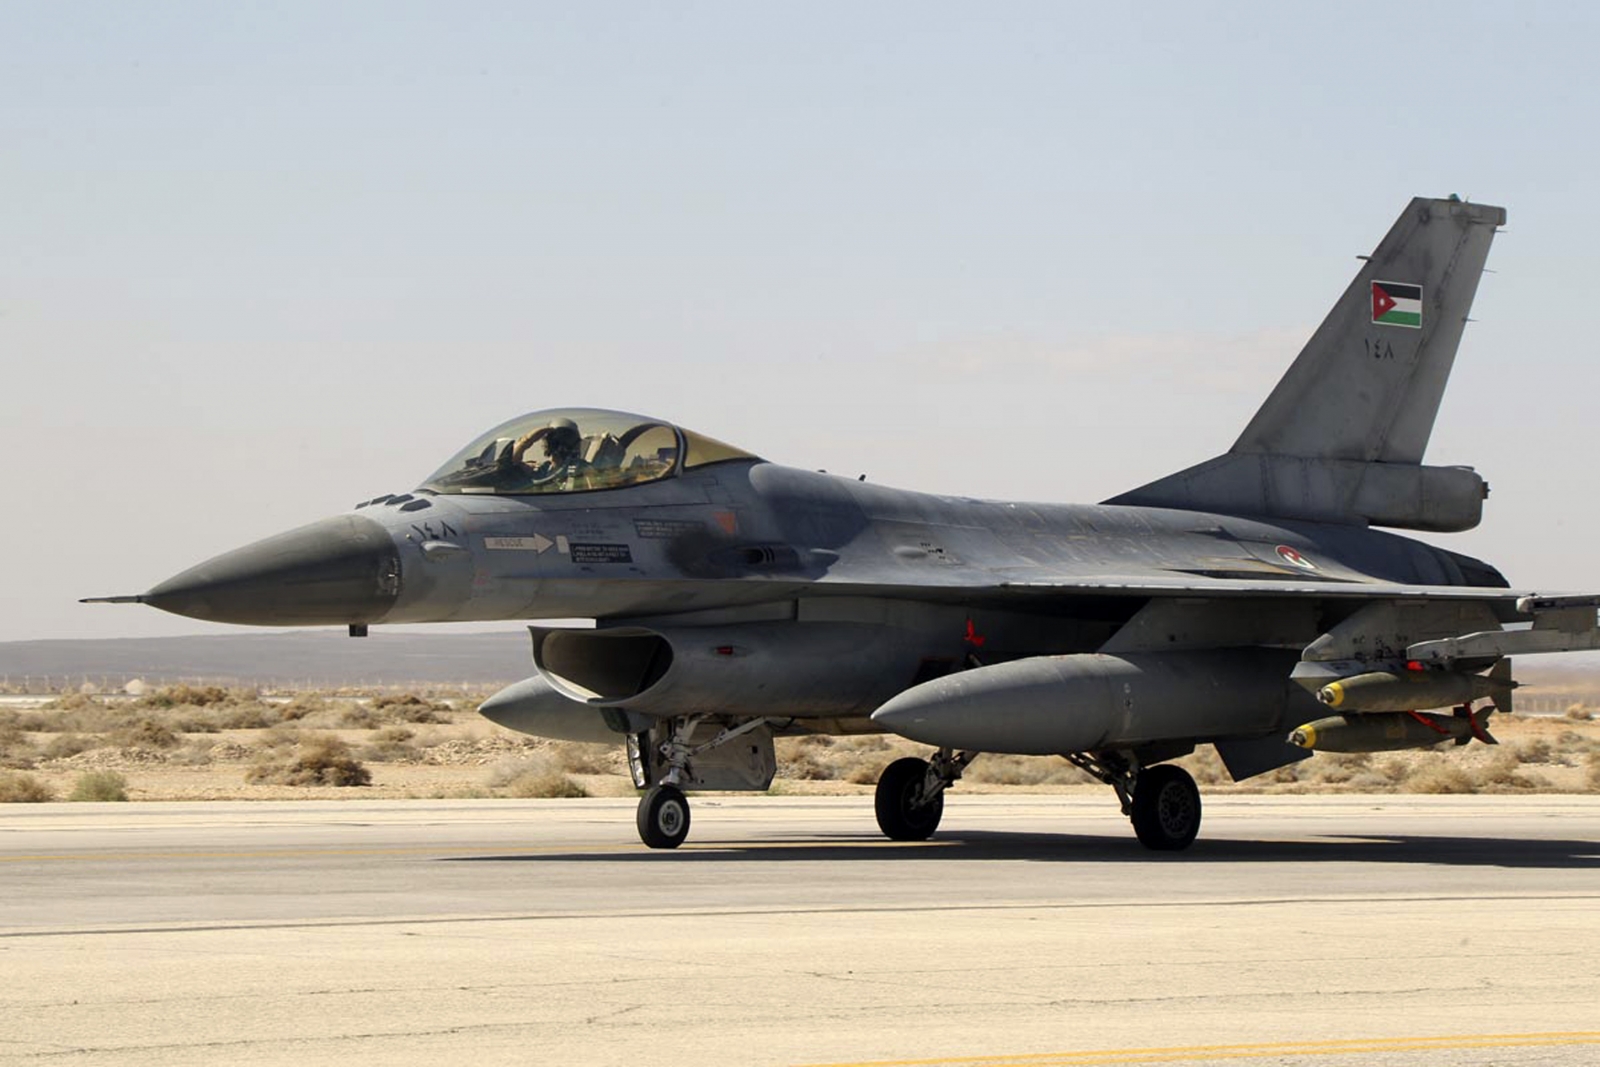 http://d.ibtimes.co.uk/en/full/1423152/royal-jordanian-air-force-plane-takes-off-air-base-strike-islamic-state-syrian-city-raqq.jpg?w=735&h=490&l=50&t=40